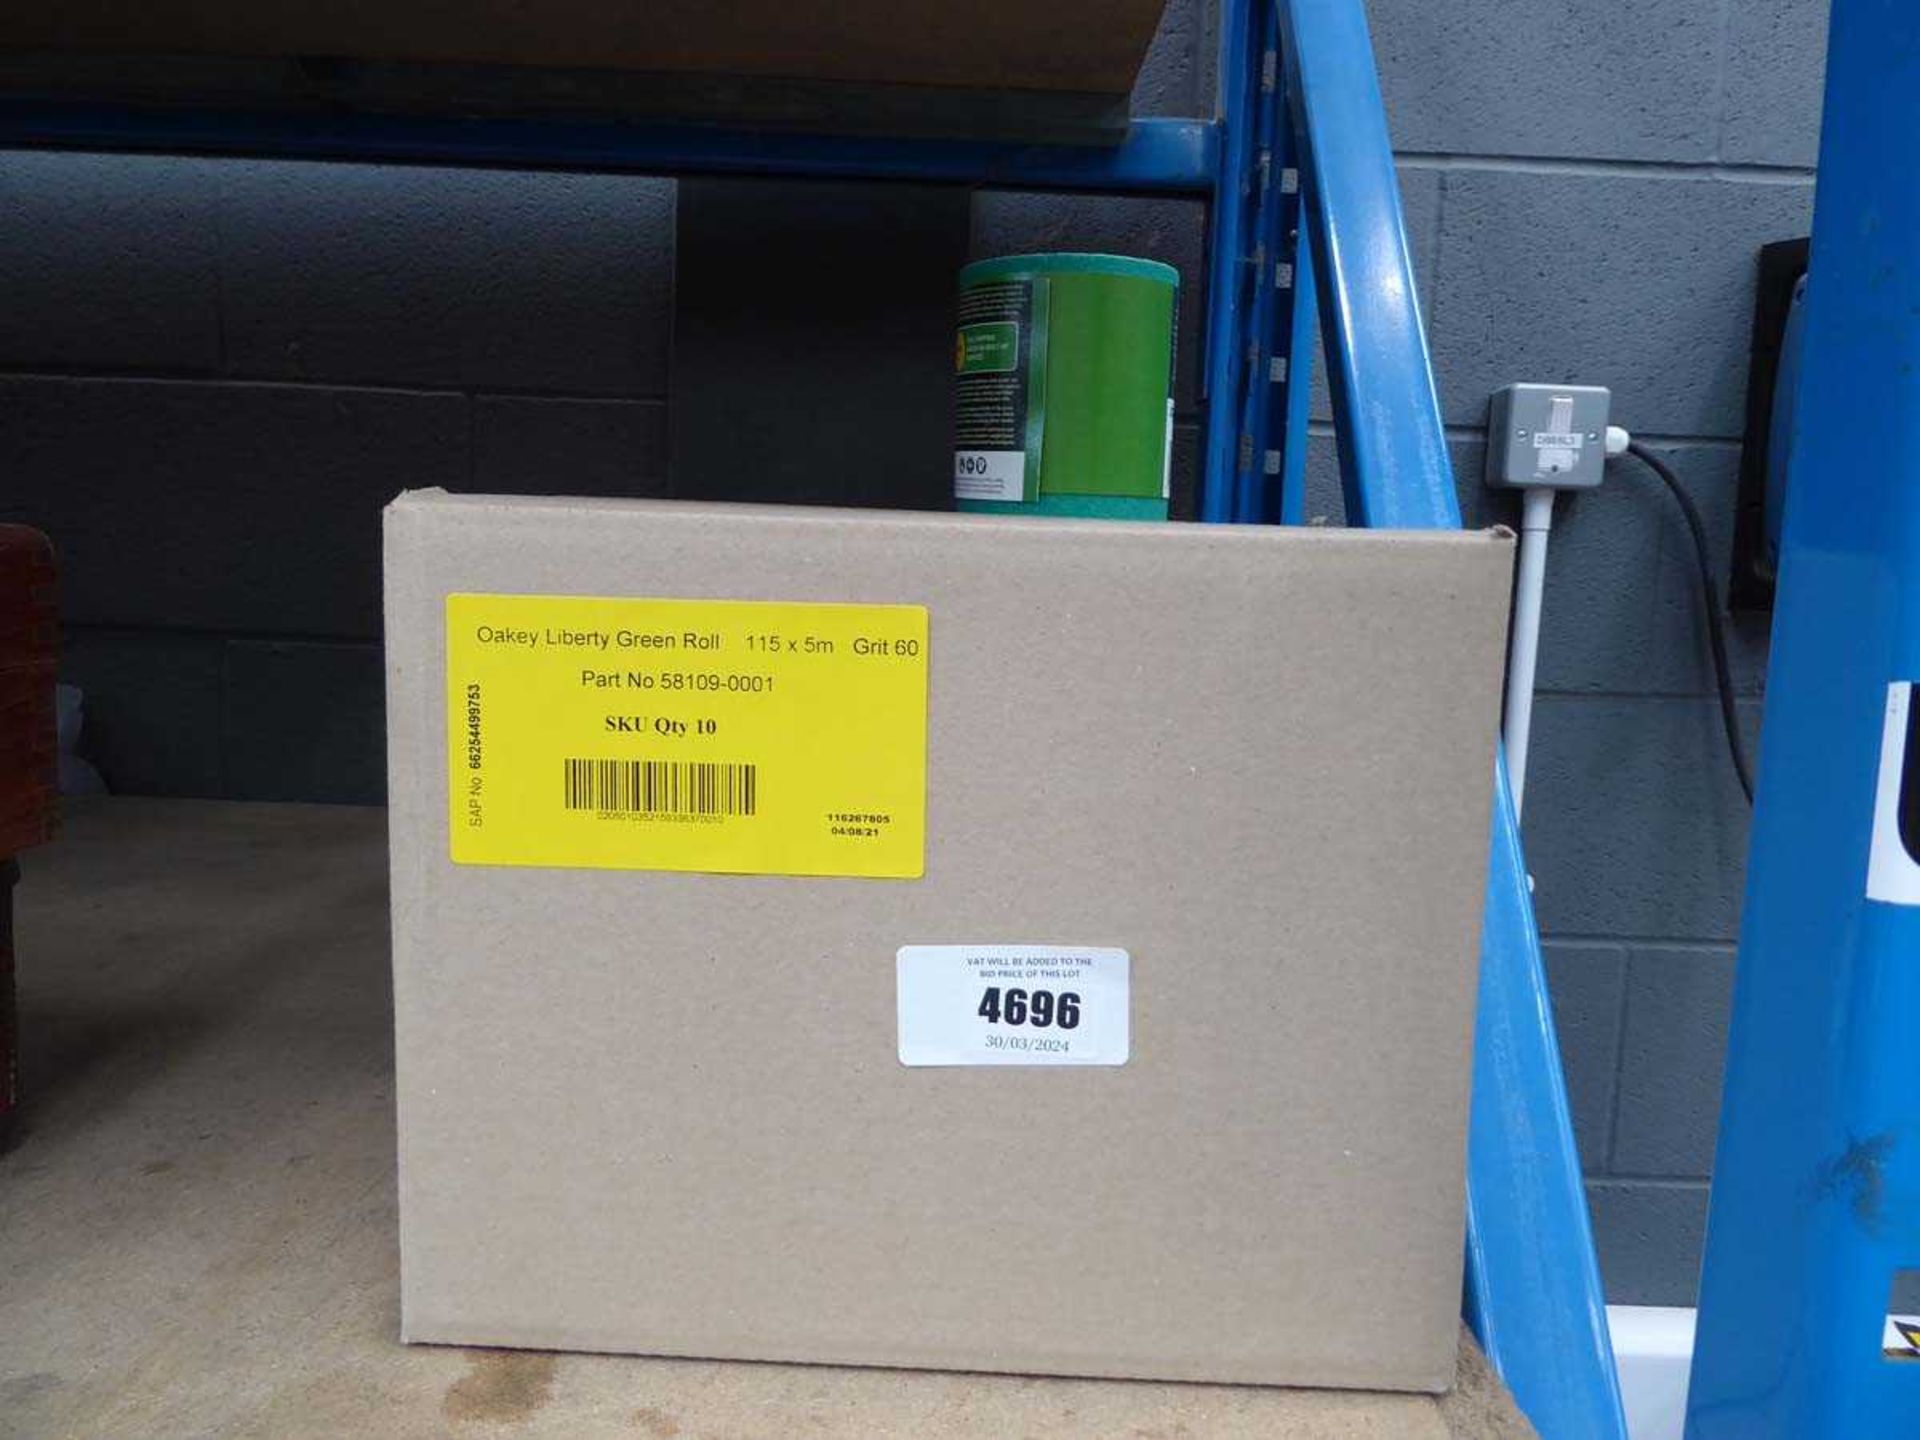 +VAT 2 boxes of Oakley liberty green 115 x 5m 60 grit sanding rolls